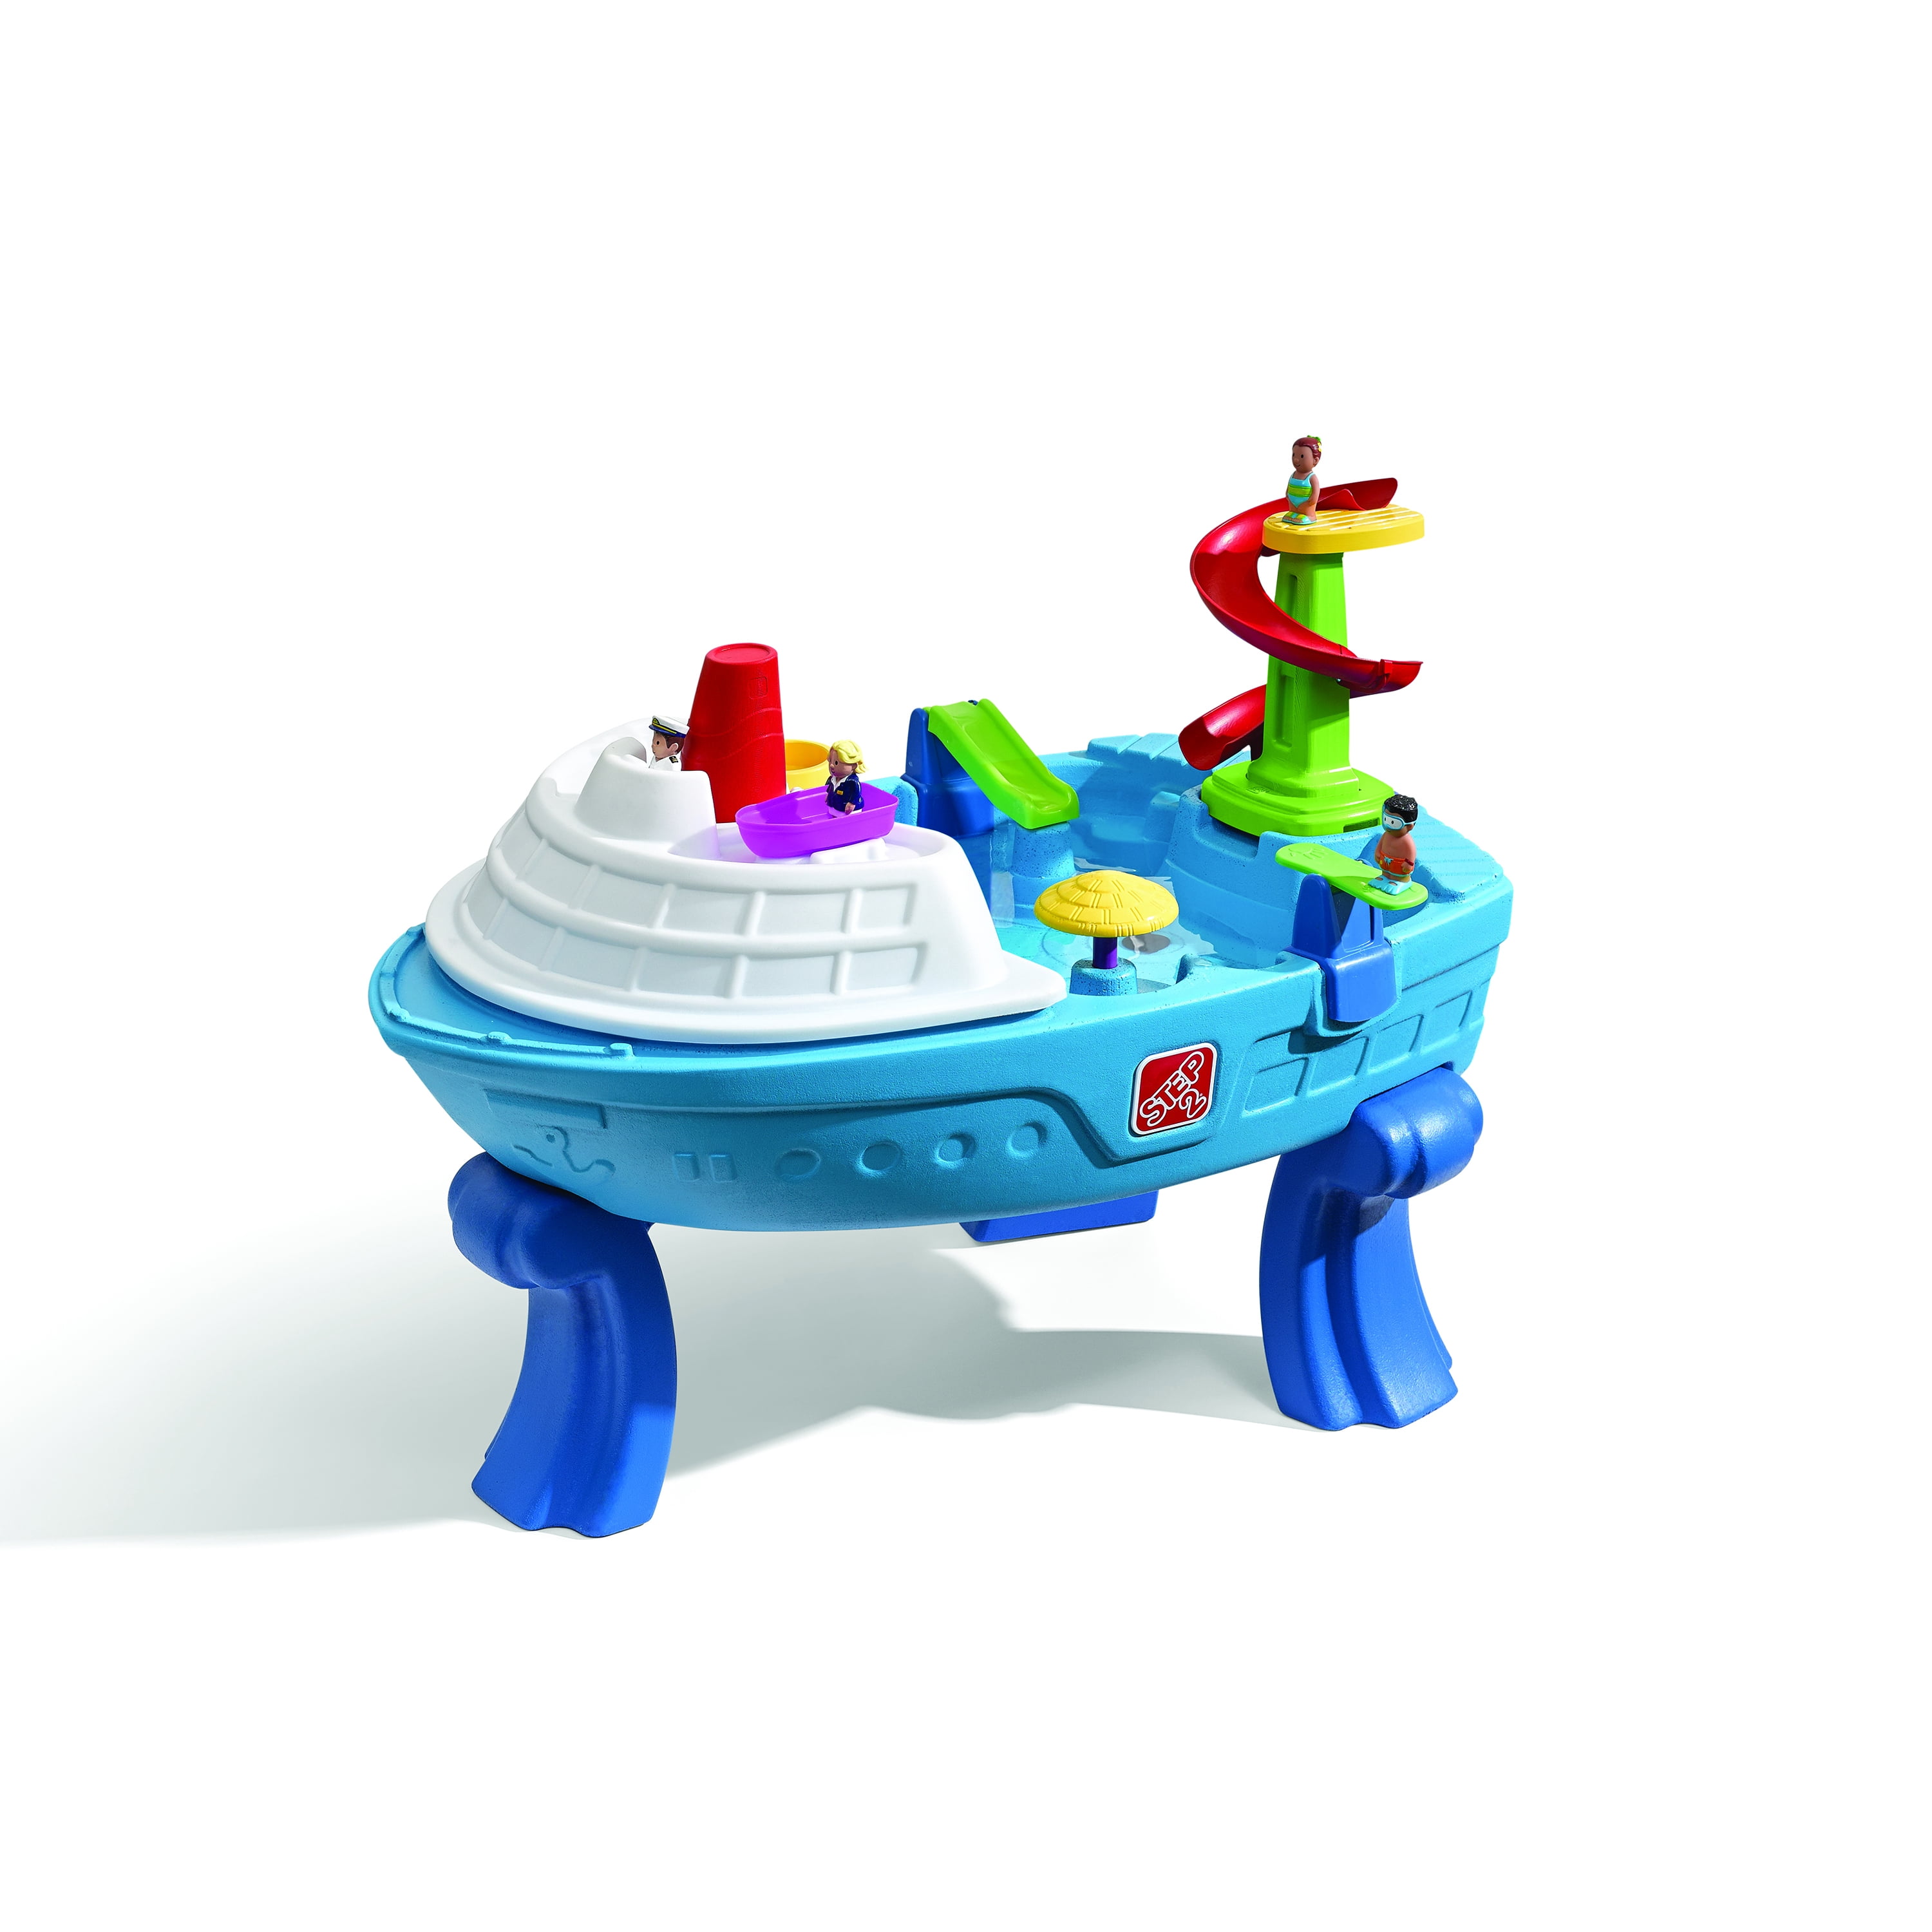 MARINE STEERING WHEEL BLUE Swing Seat Set Toy Accessory Just Fun Sport Boat 